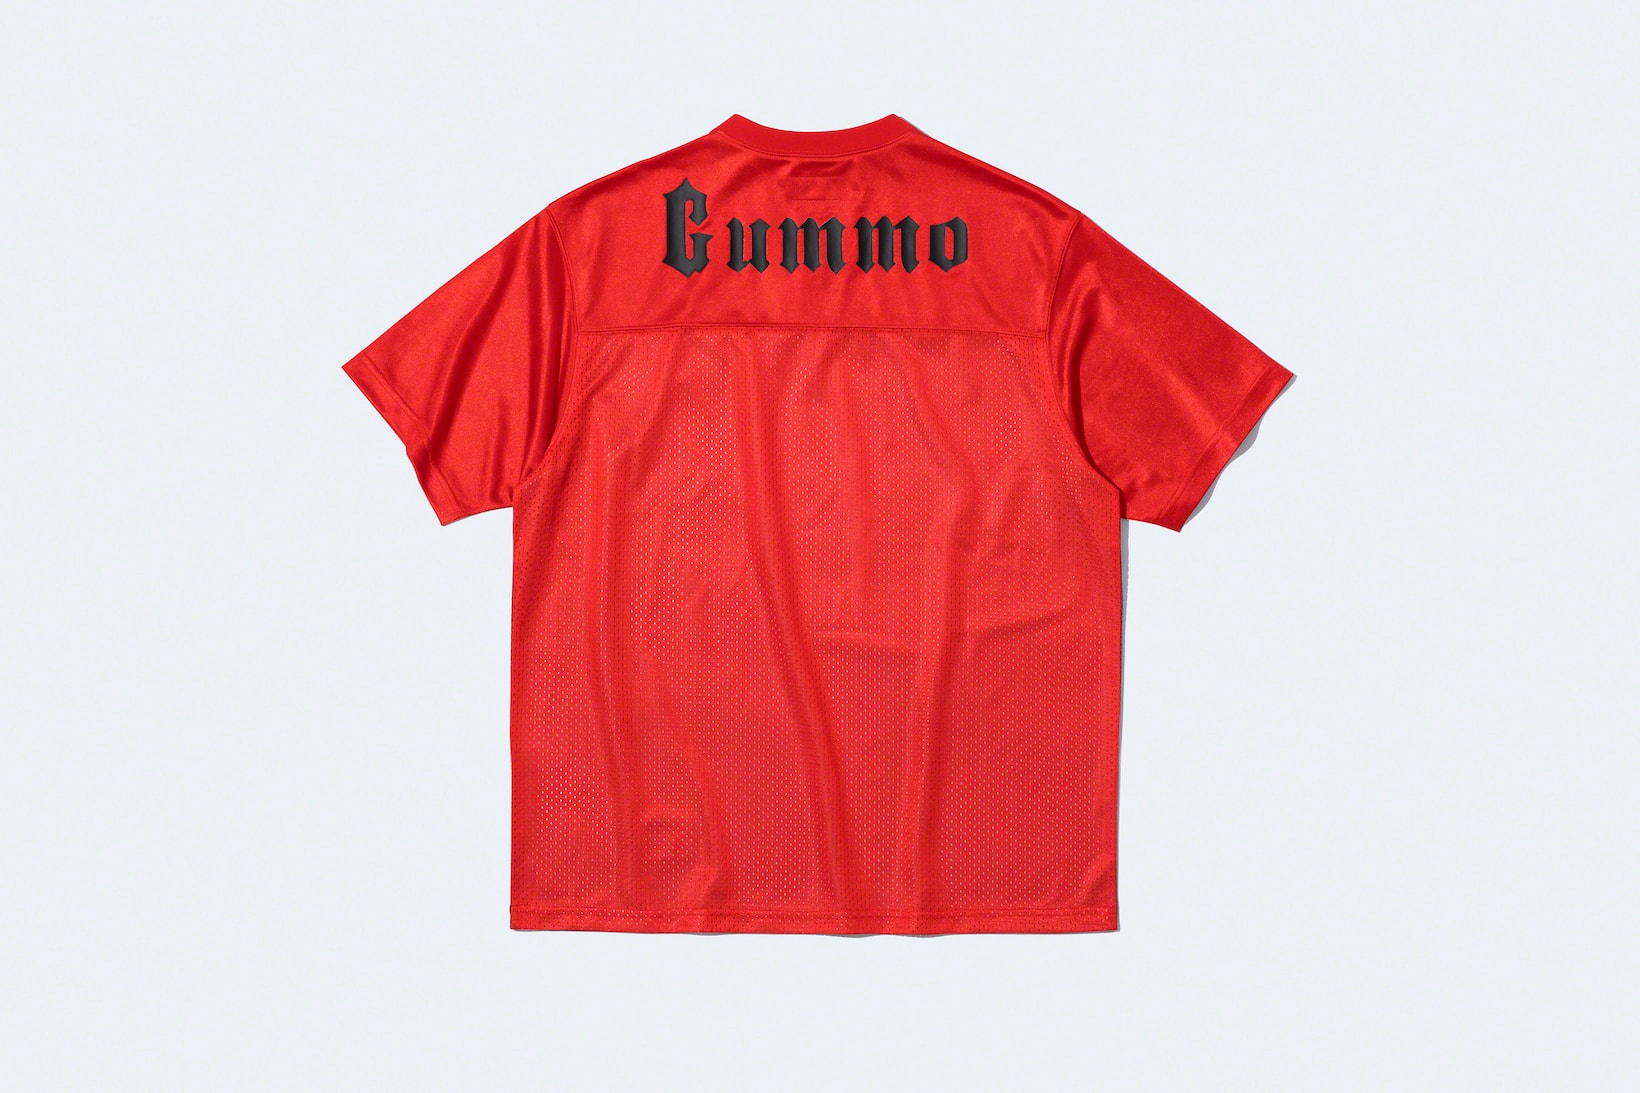 Supreme 1997 Experimental Drama Film Gummo Movie Collaboration Collection Tshirt Tee